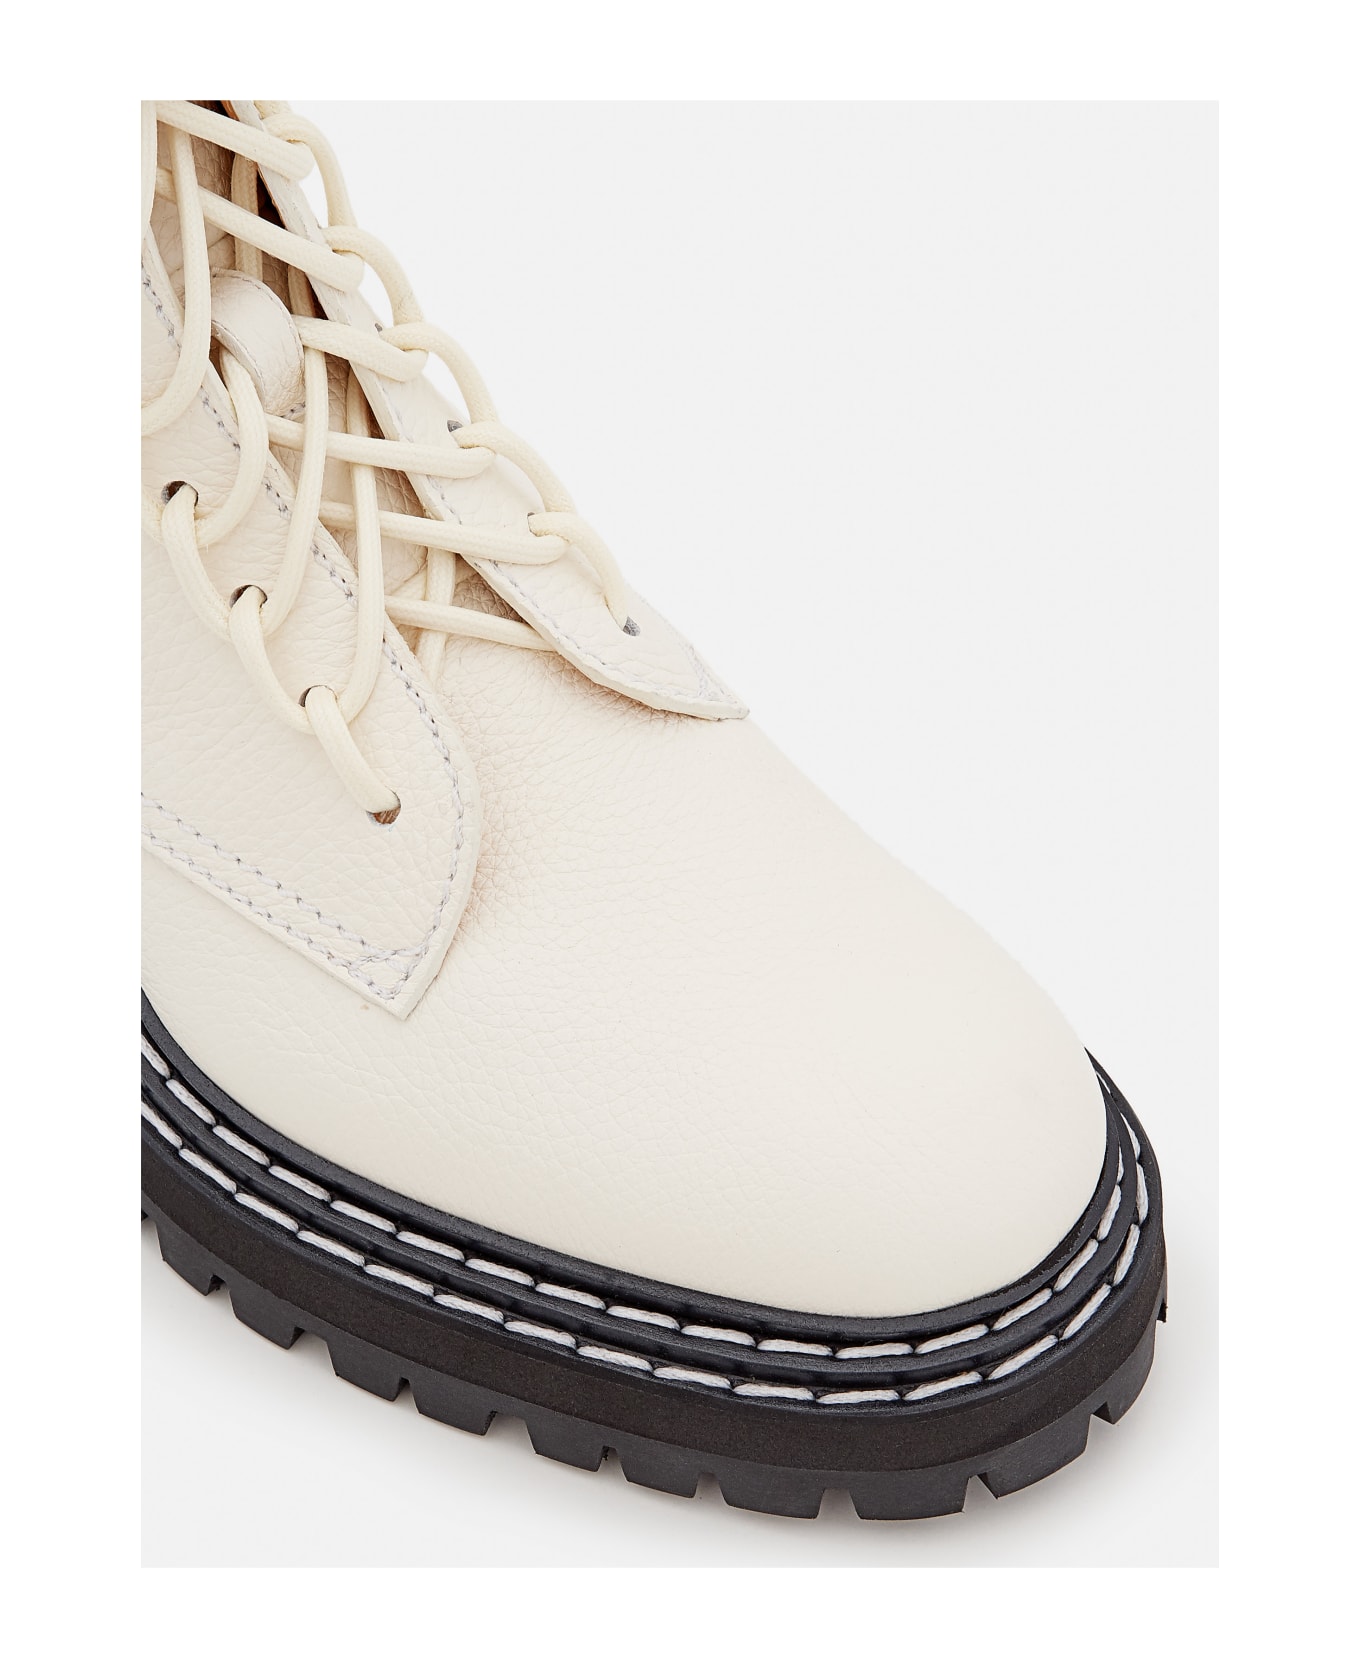 Proenza Schouler Combat Boots - White